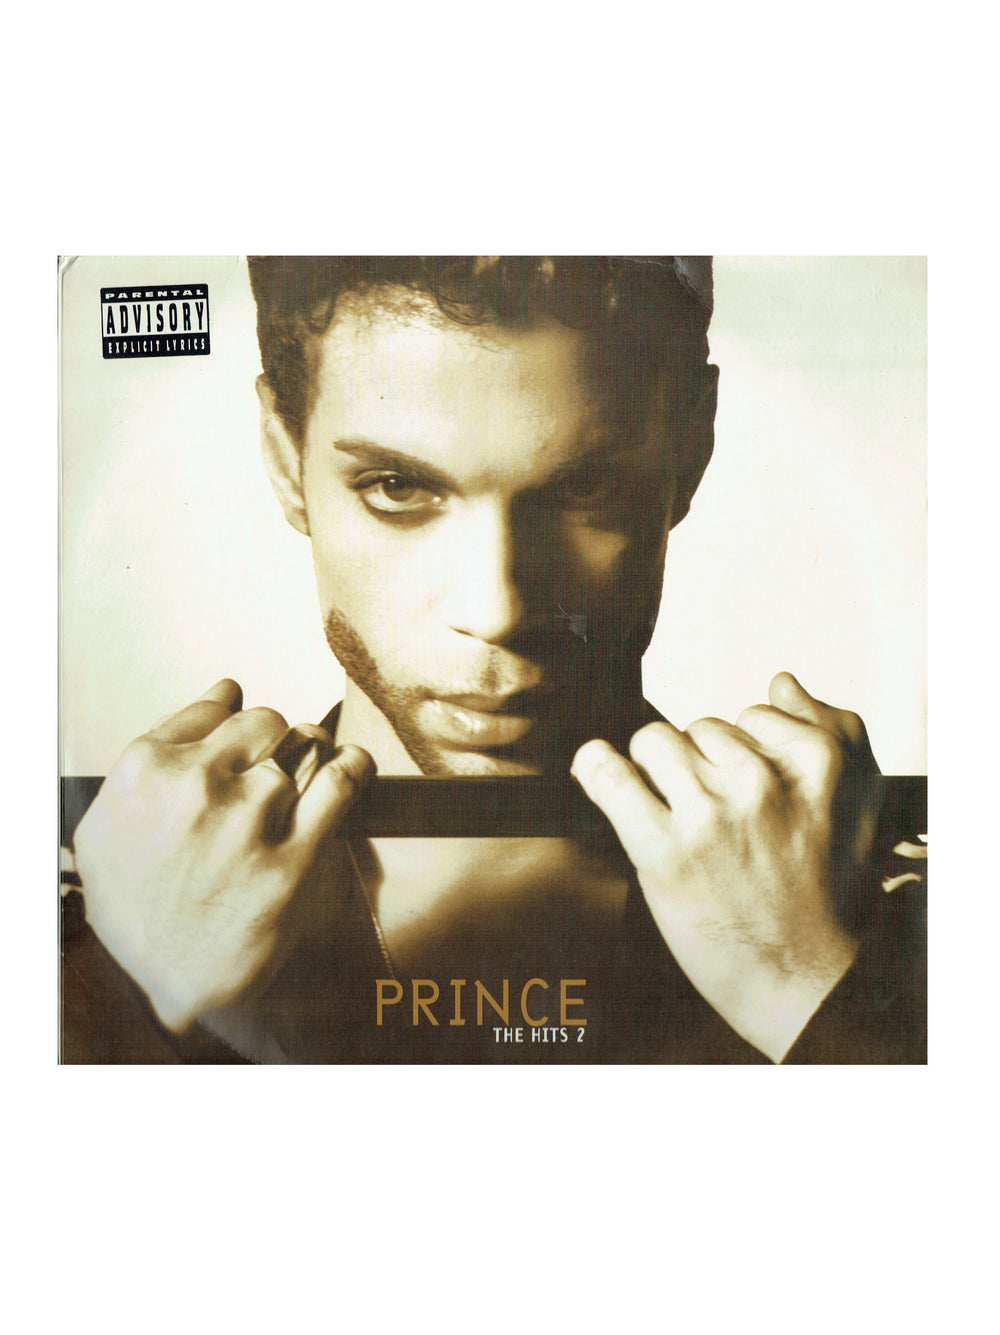 Prince The Hits 2 Official Vinyl Double Album 1993 Original UK/ EU Release EX